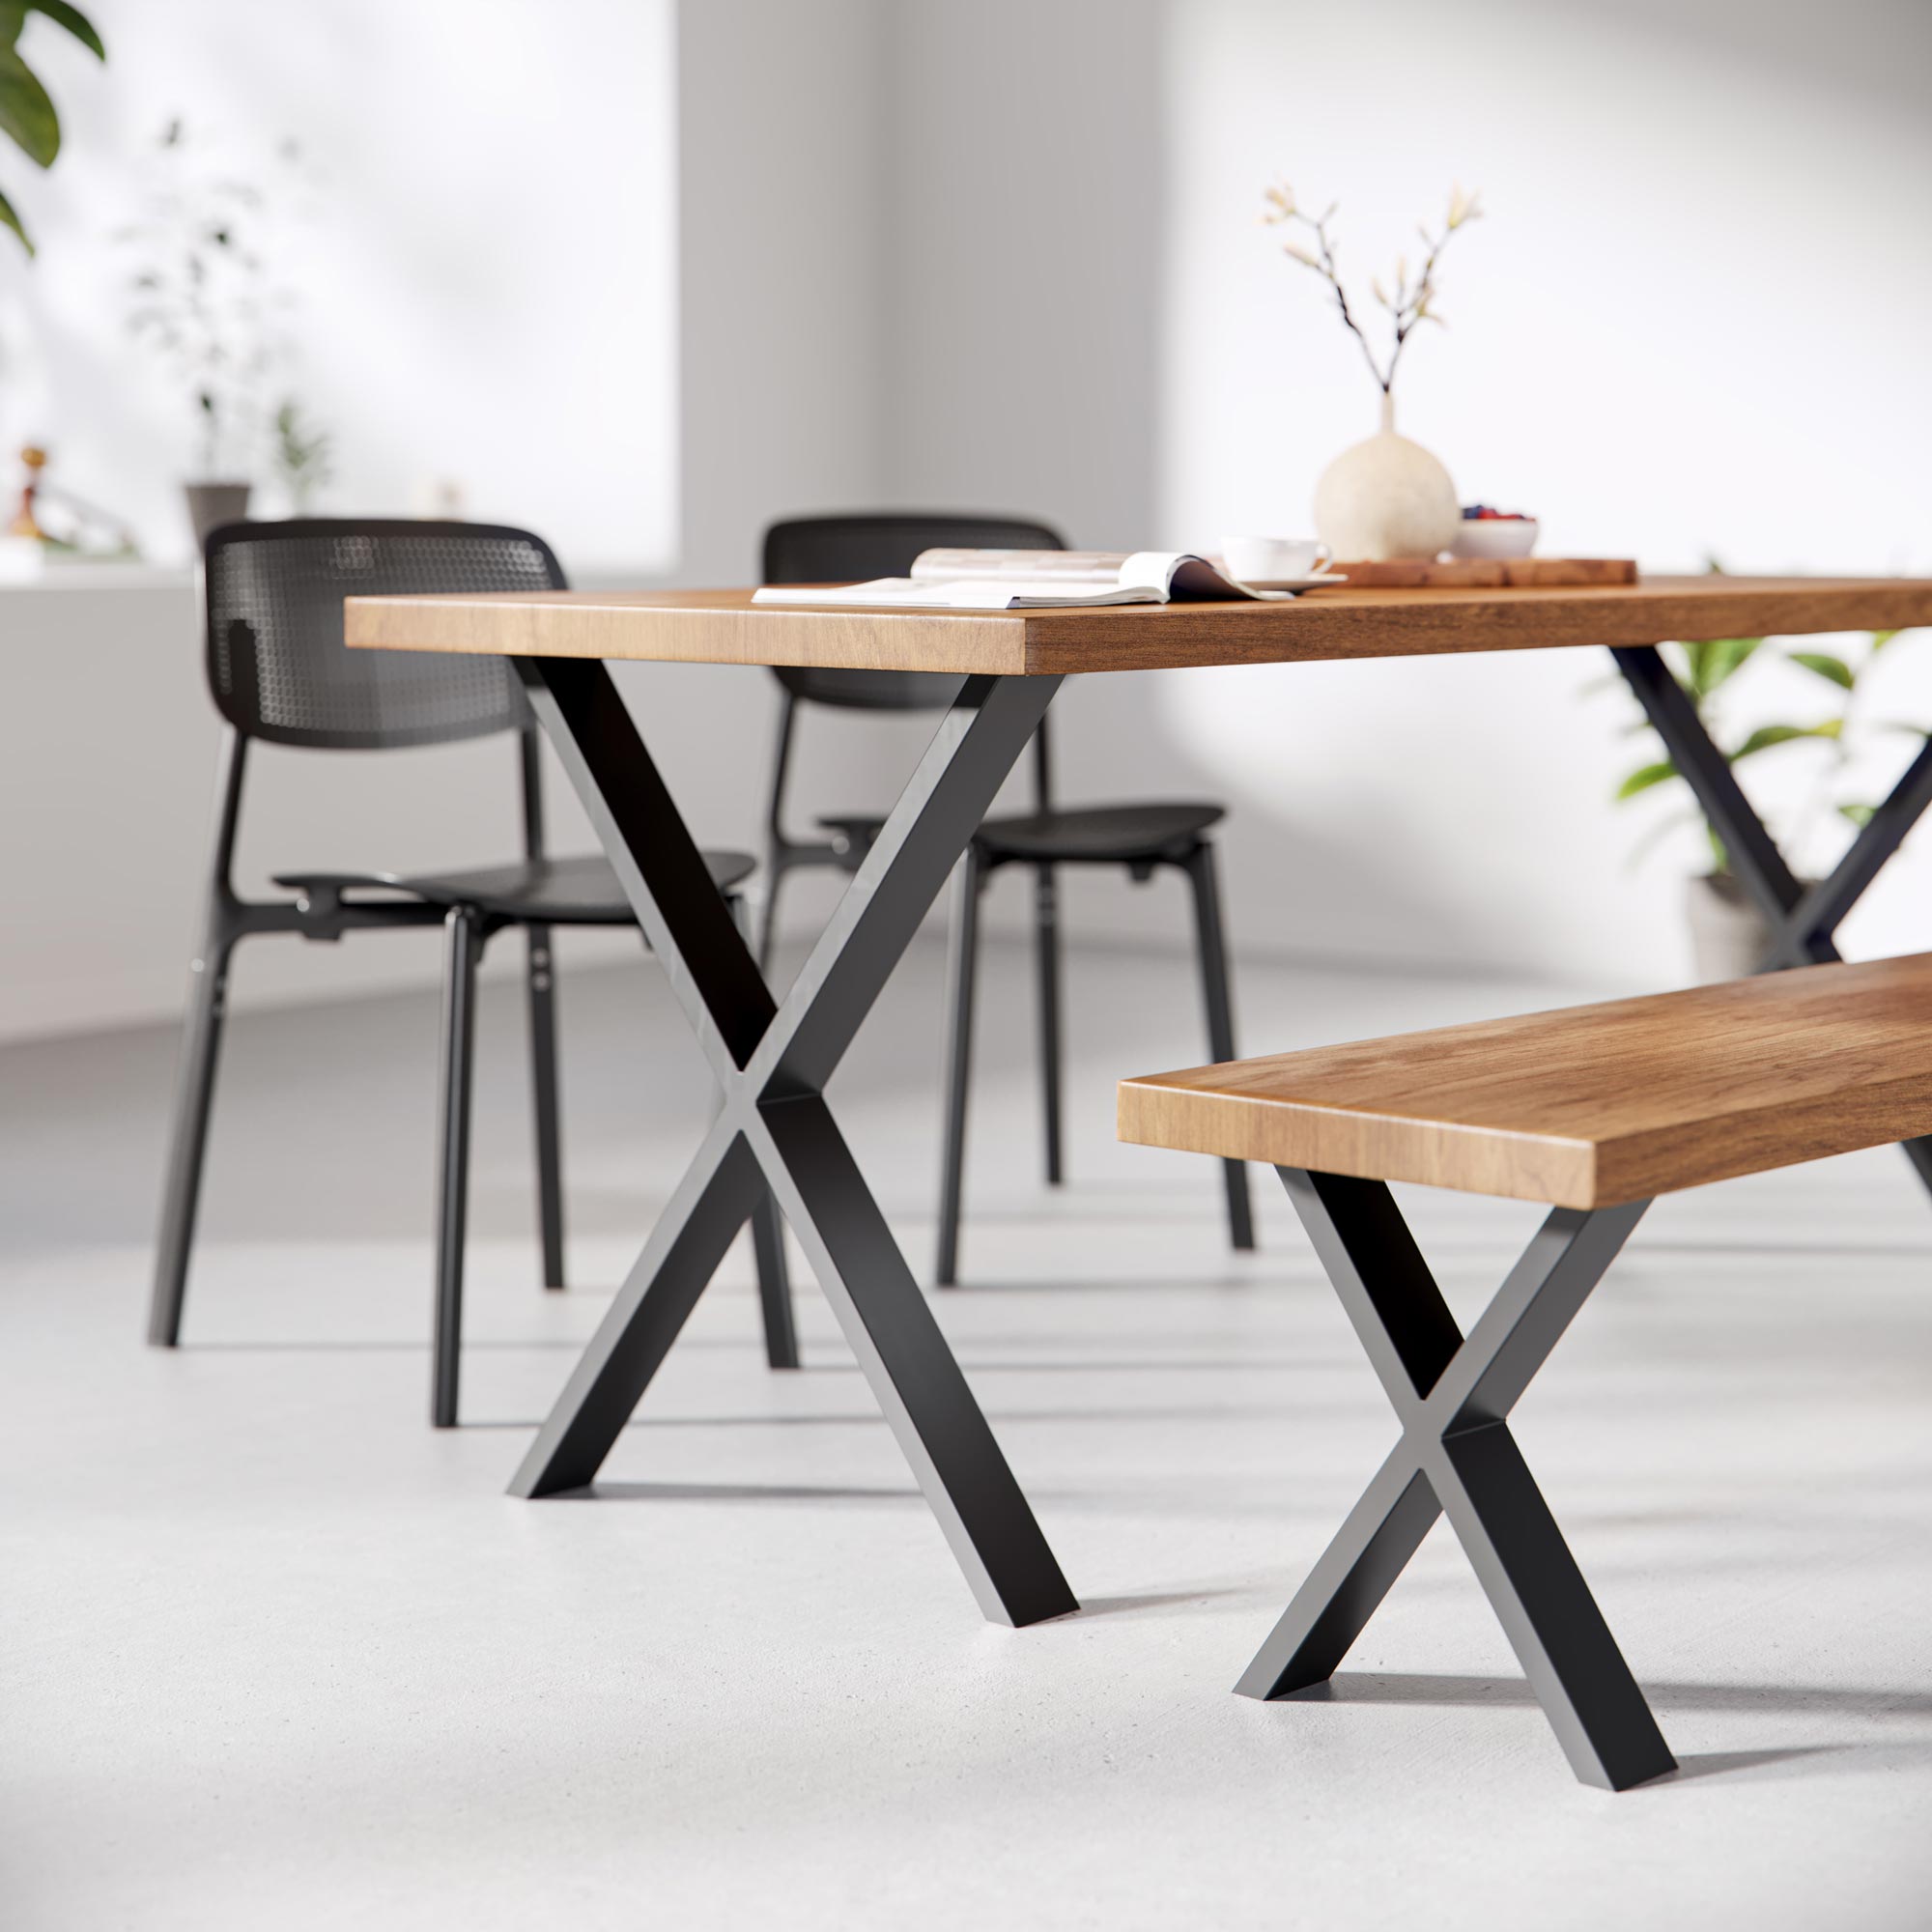 X-Frame Industrial legs-Table (H71cm x W58cm)-Black-The Hairpin Leg Co.